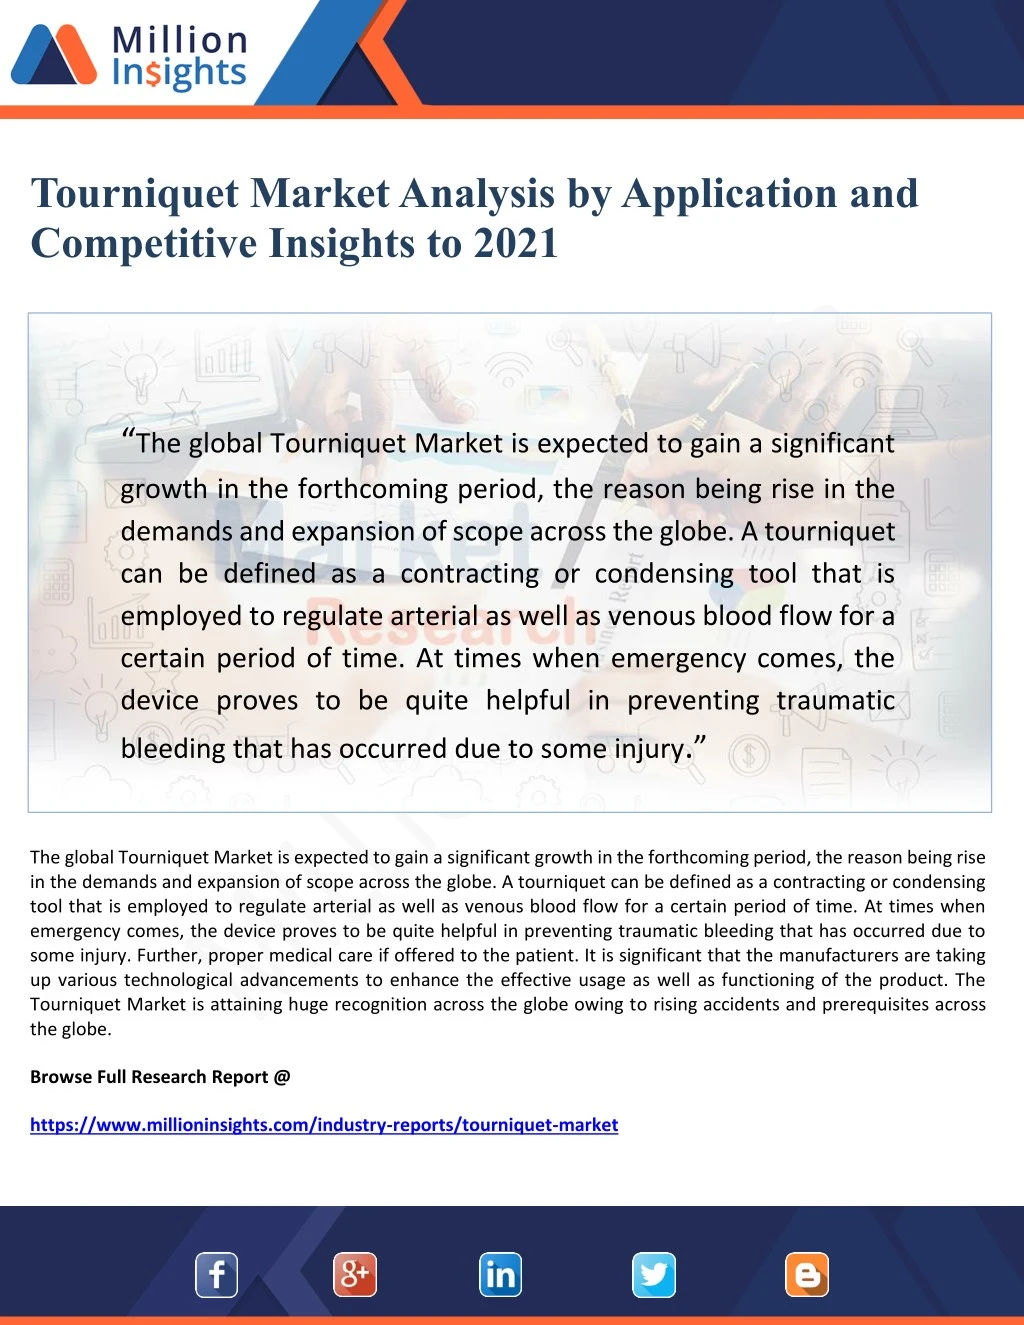 tourniquet market analysis by application